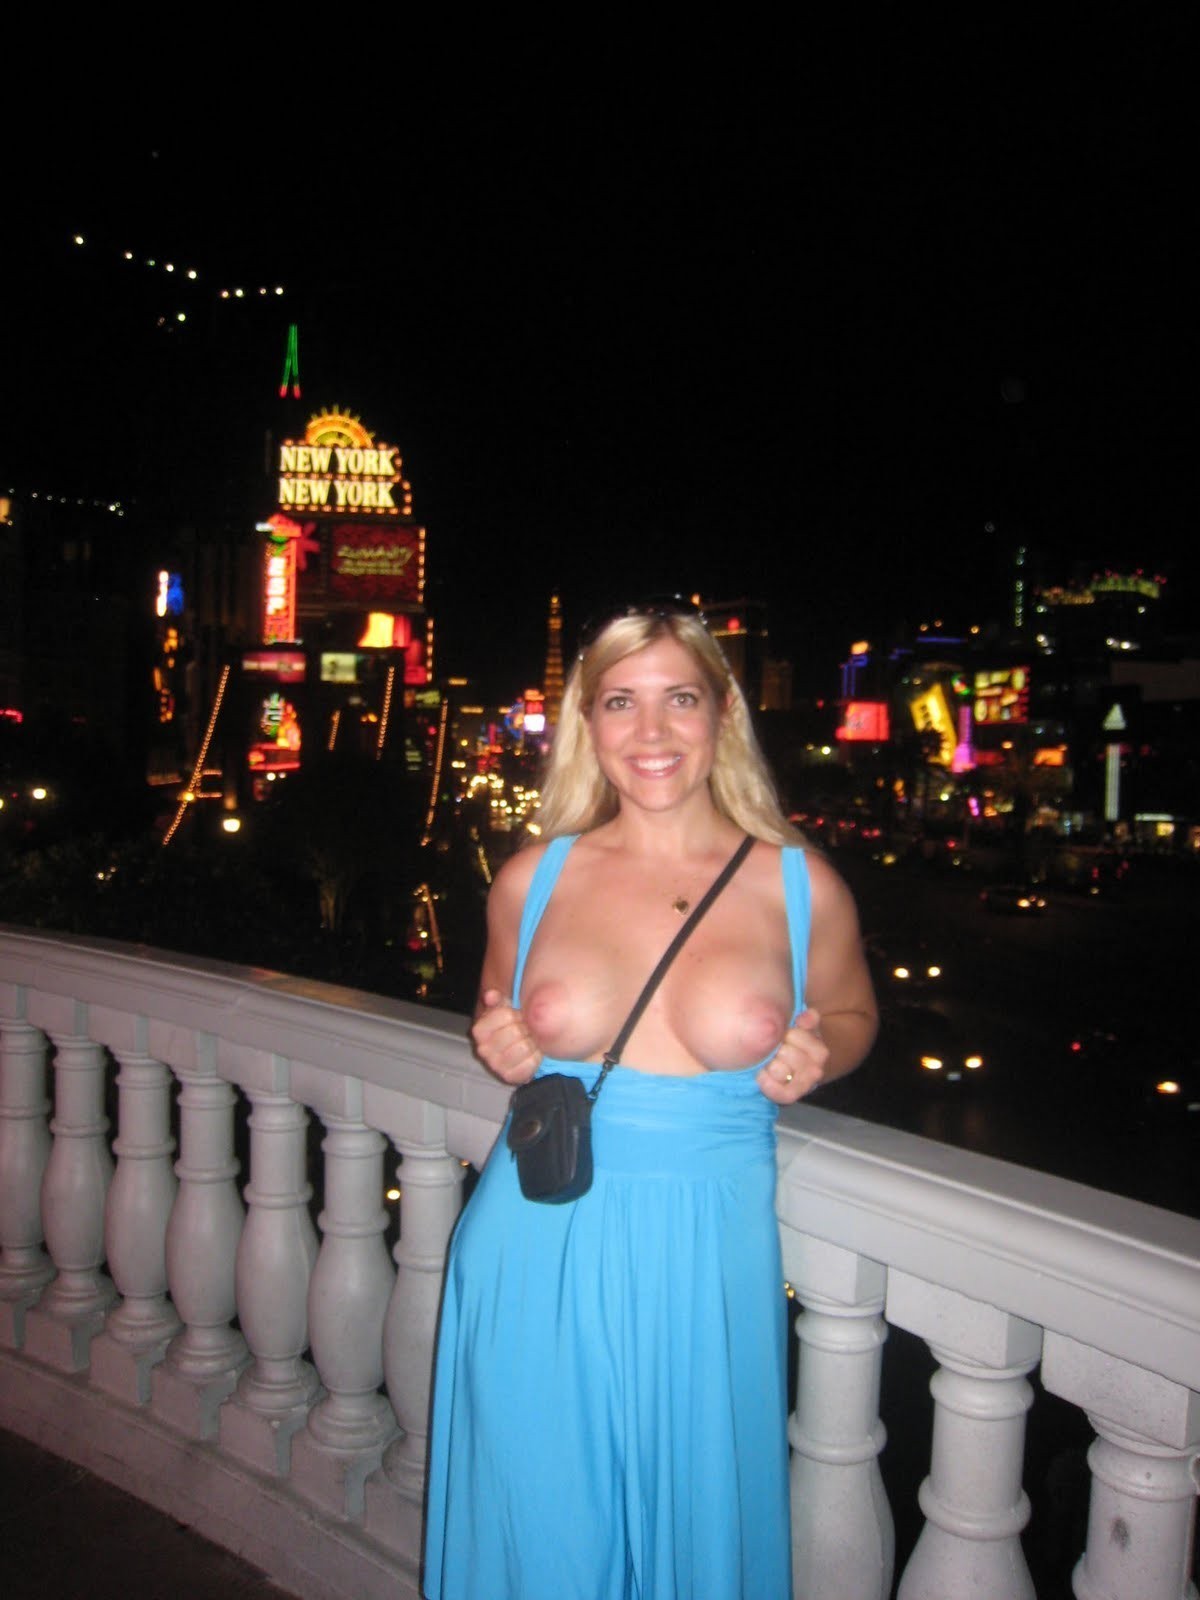 sin-city-sights:peepys-roadrunner:  Flashing her tits around Vegas!   On the pedestrian